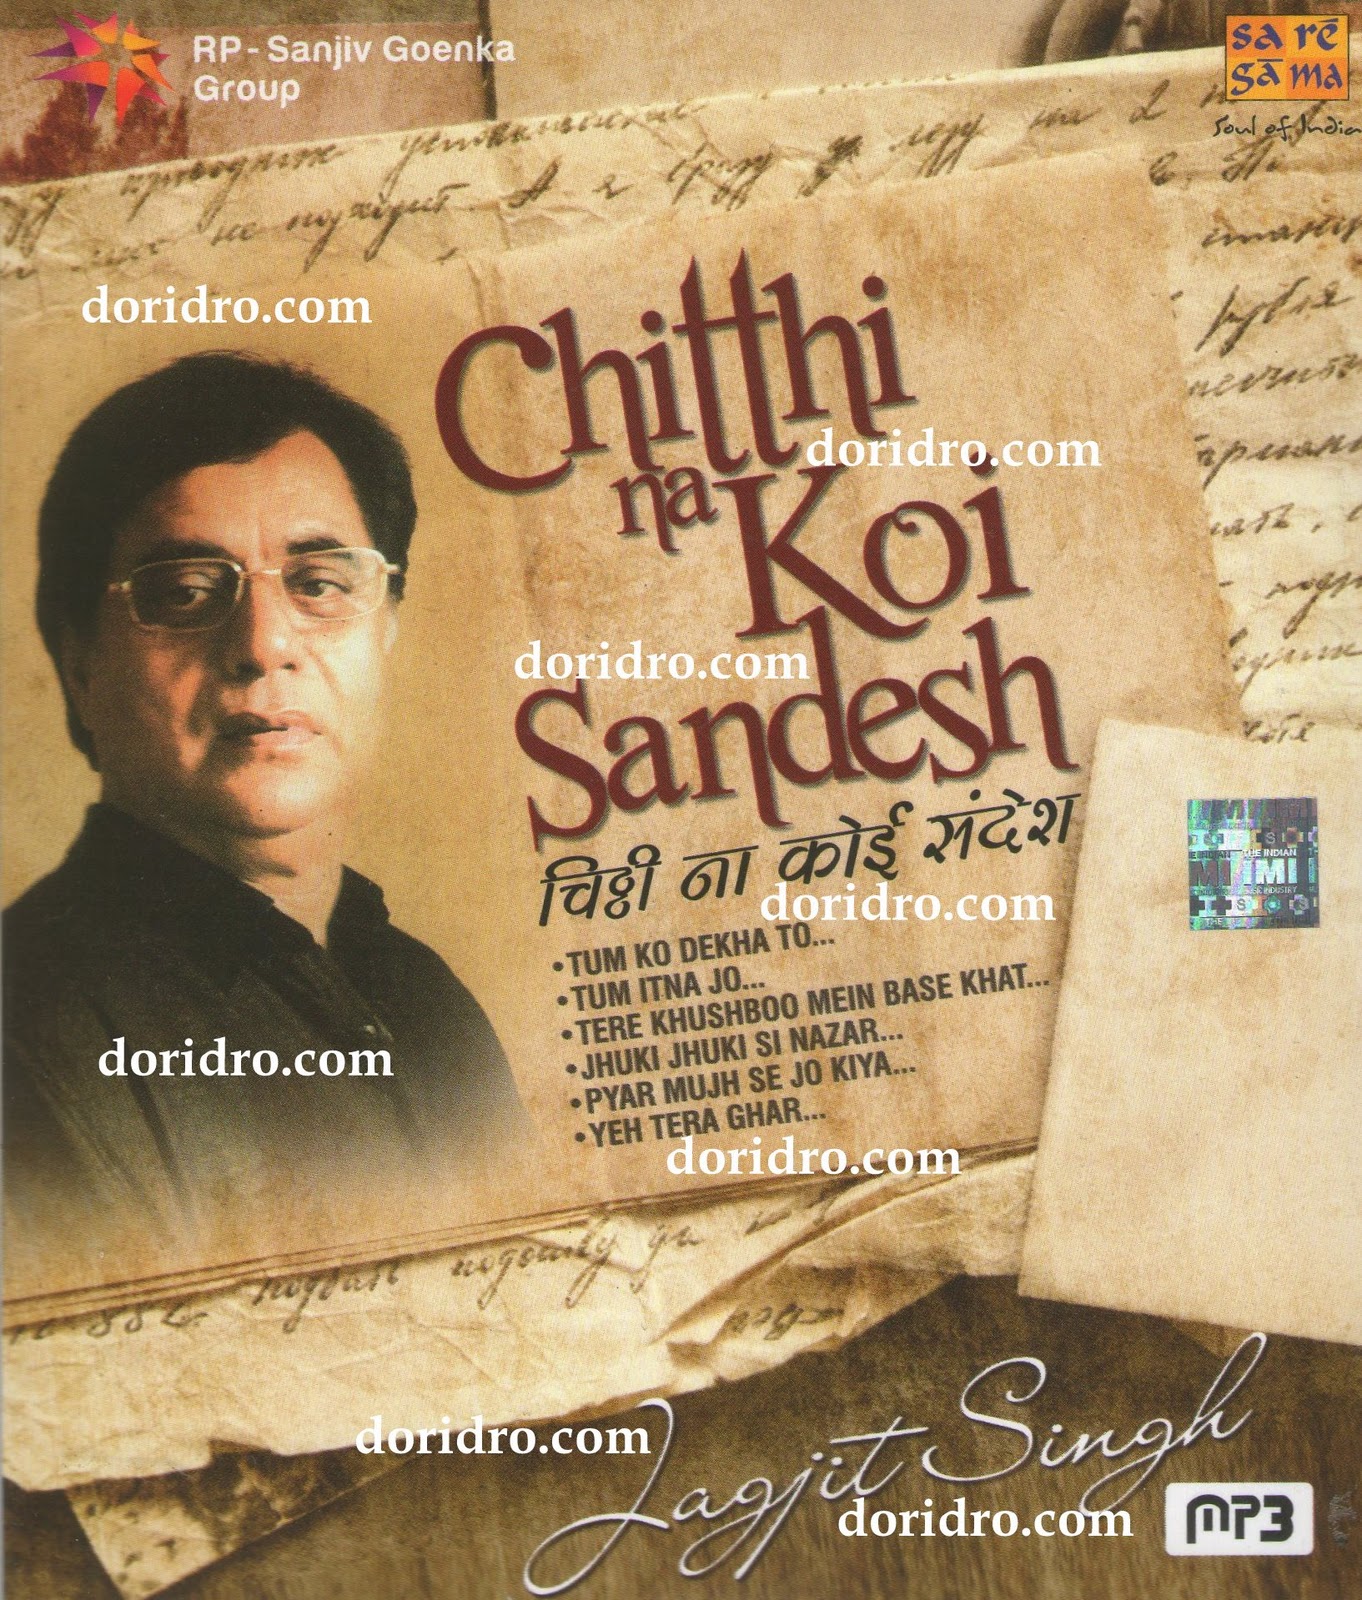 Jagjit singh chithi na koi sandesh lyrics